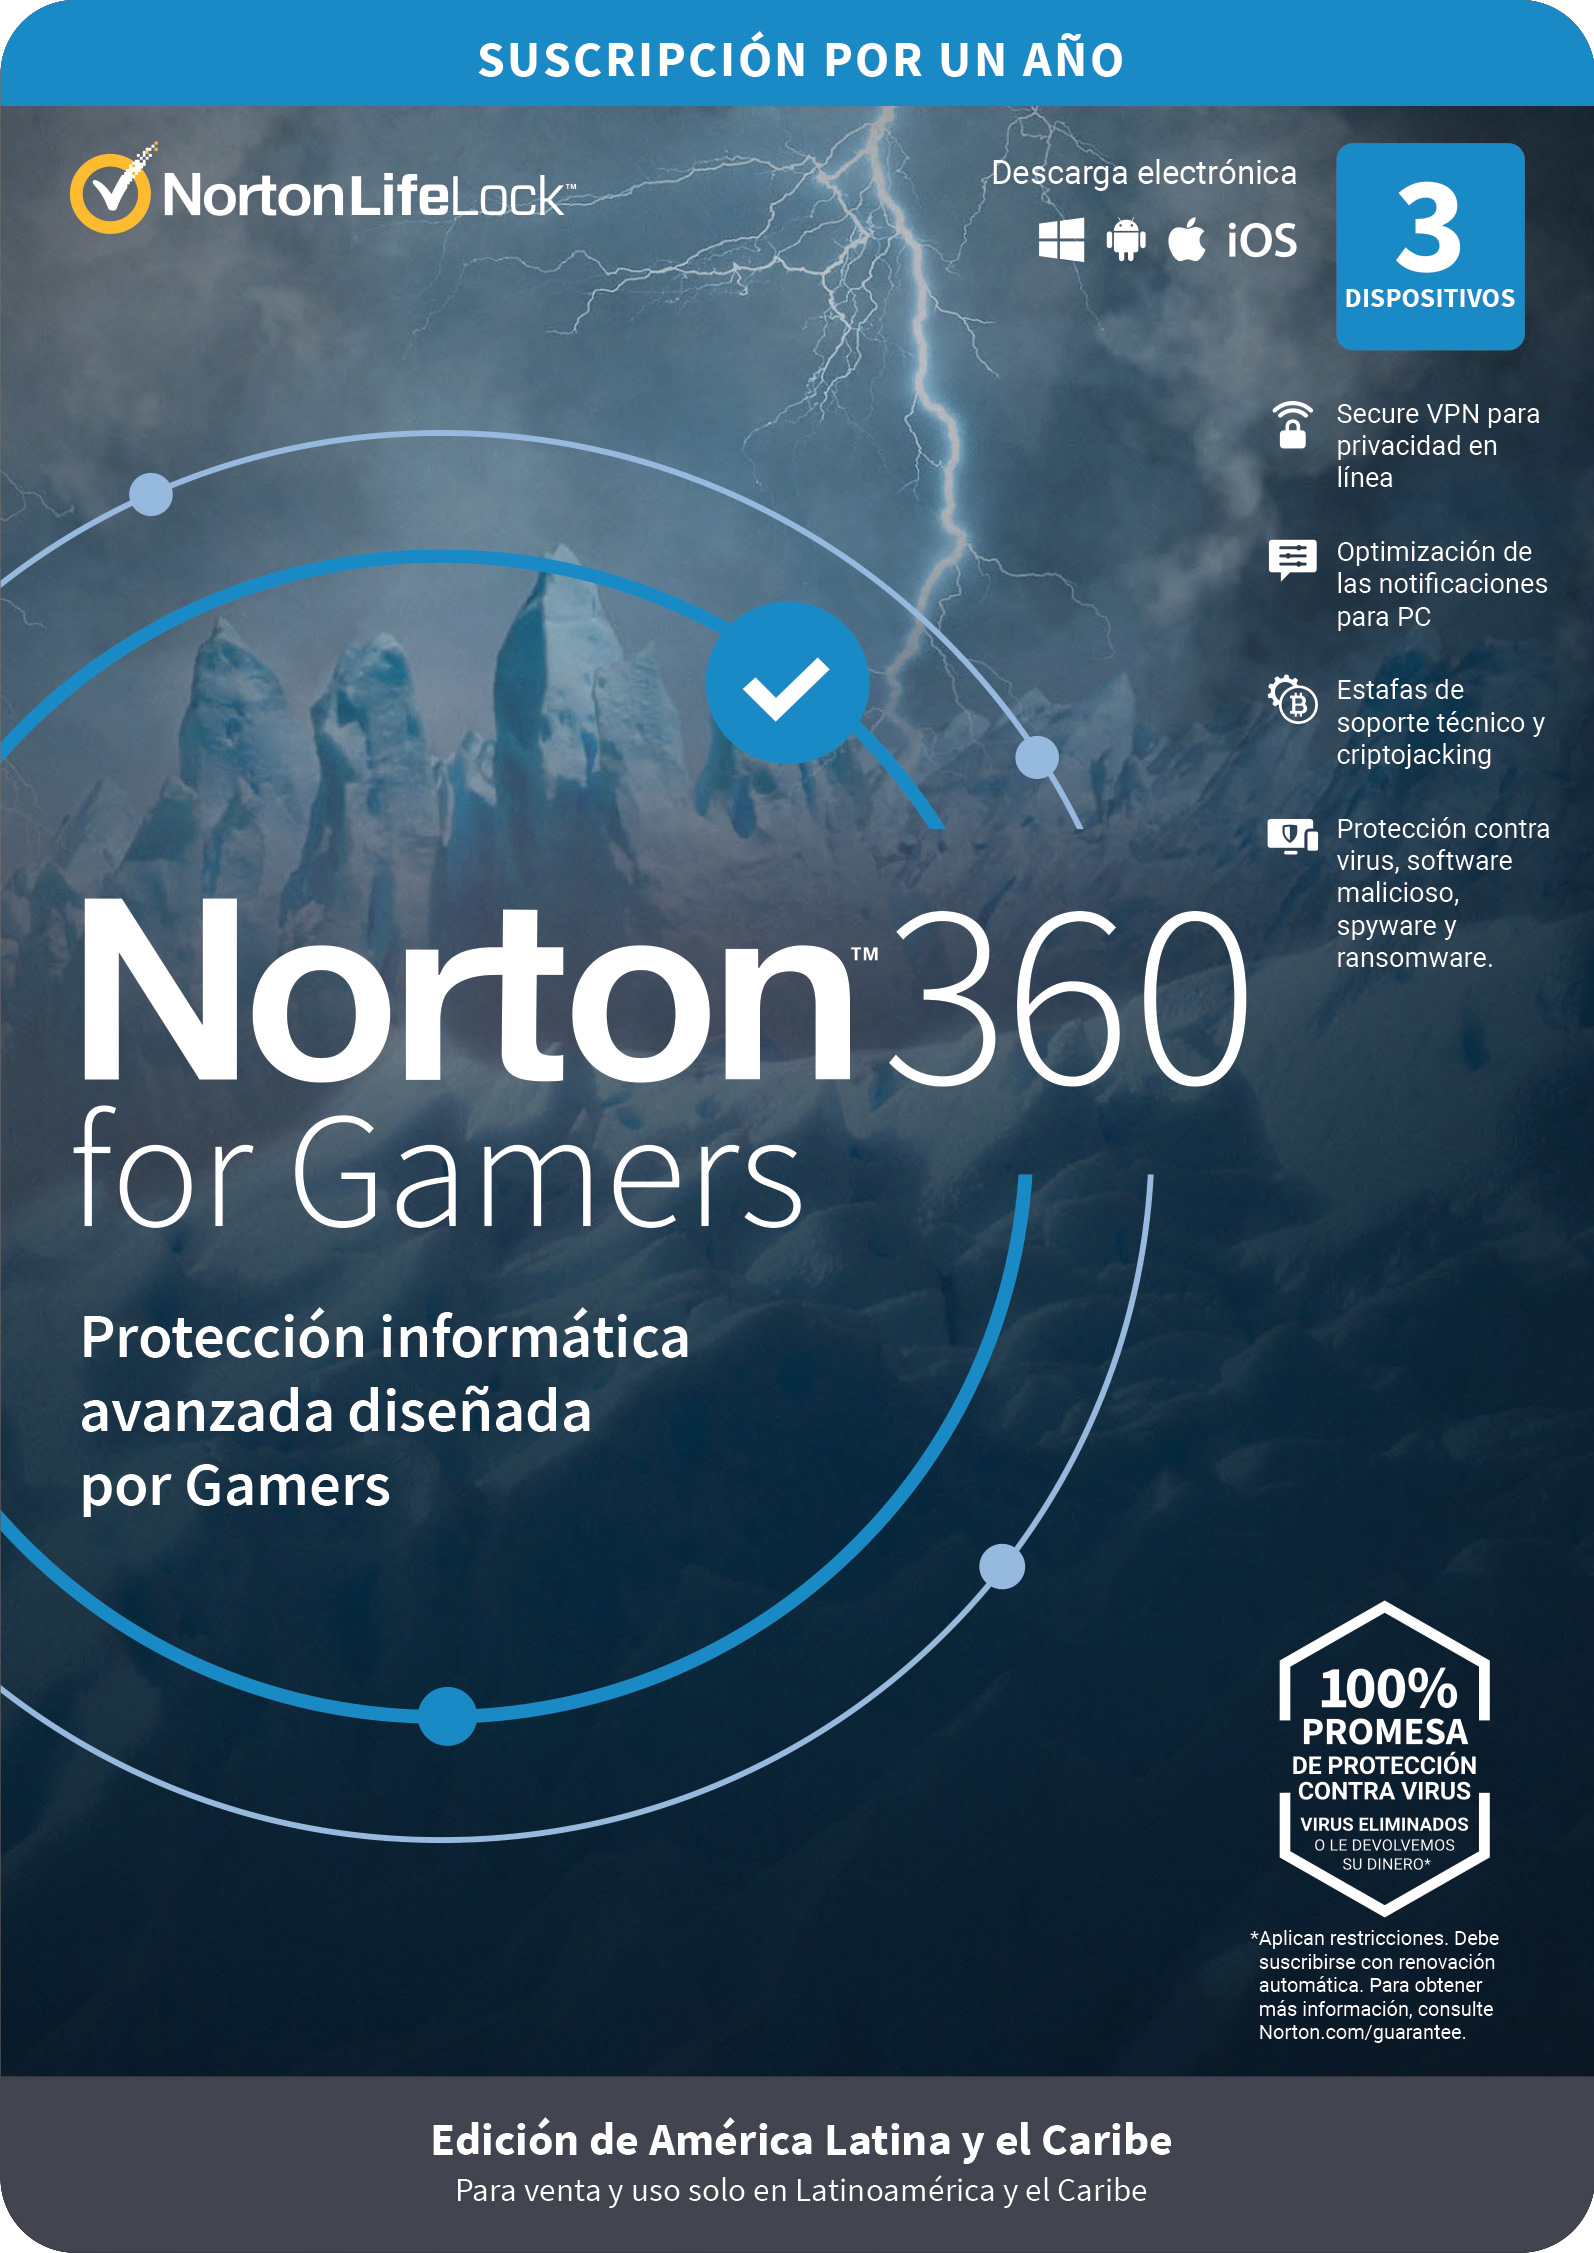 Antivirus NORTON TMNR-023 360 Gamers - 3 licencias